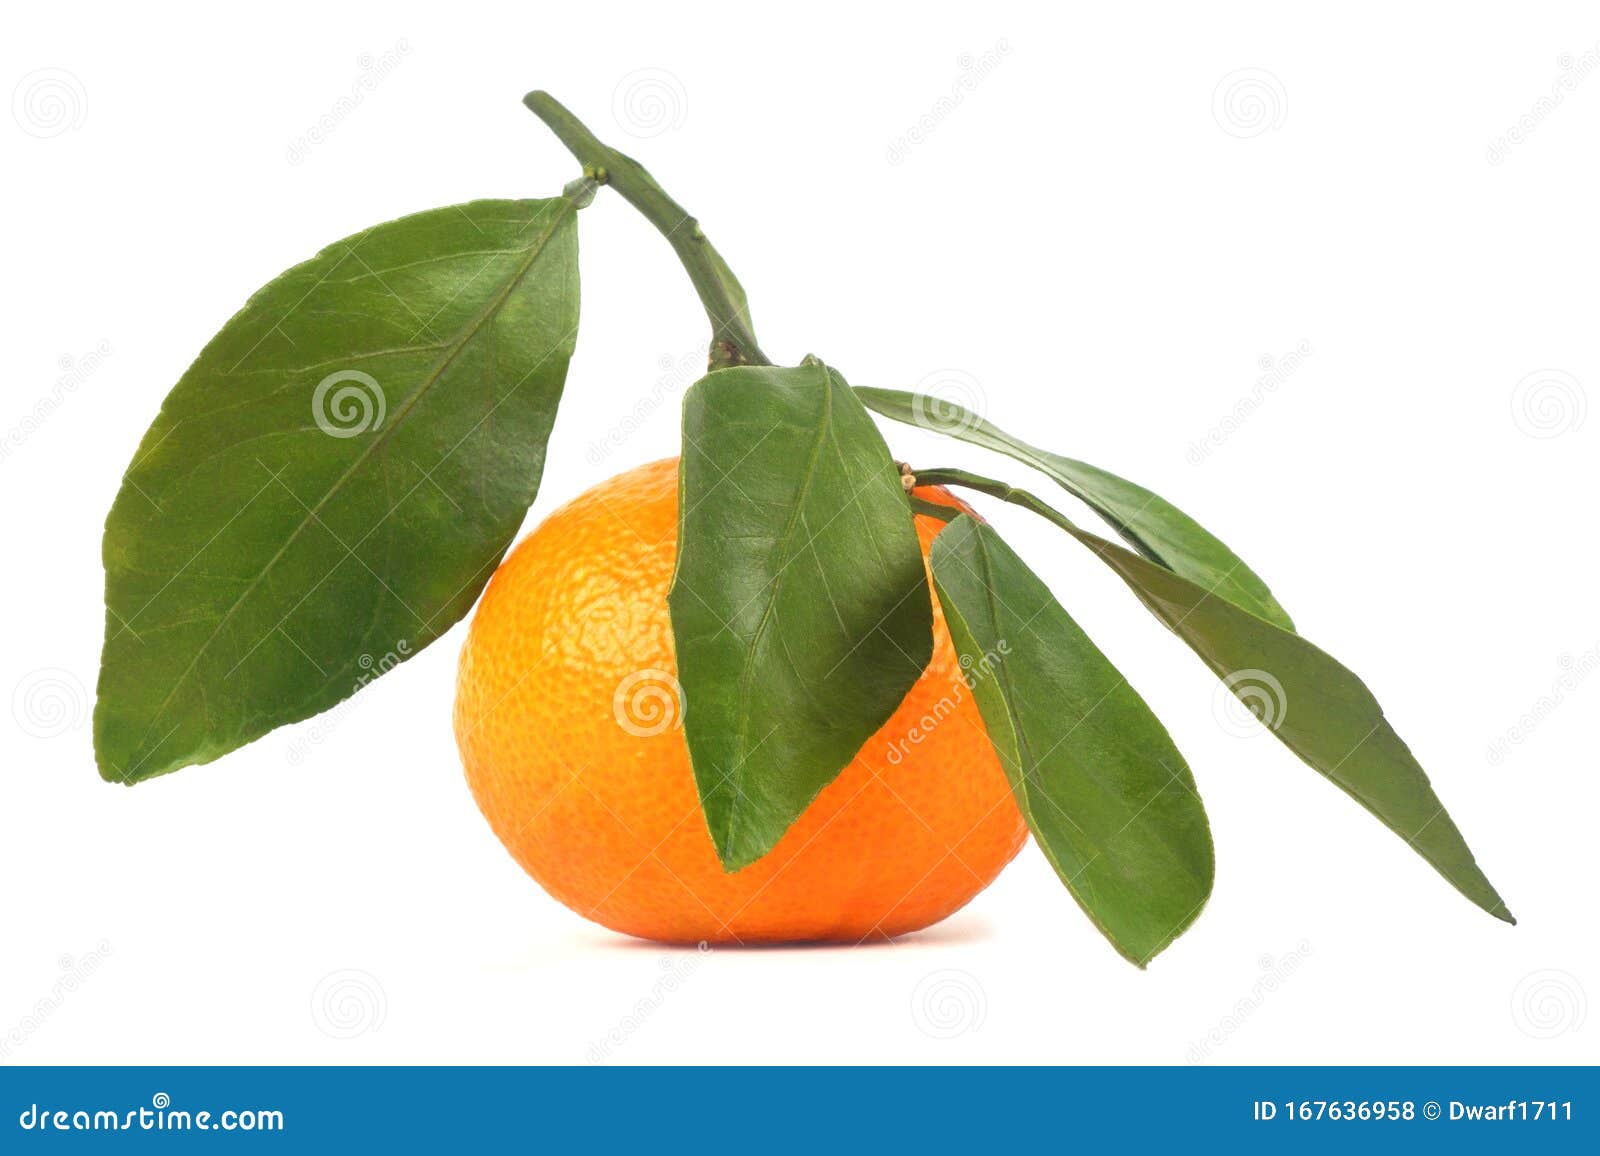 Ripe  juicy orange mandarin with leaves Isolated on a white background